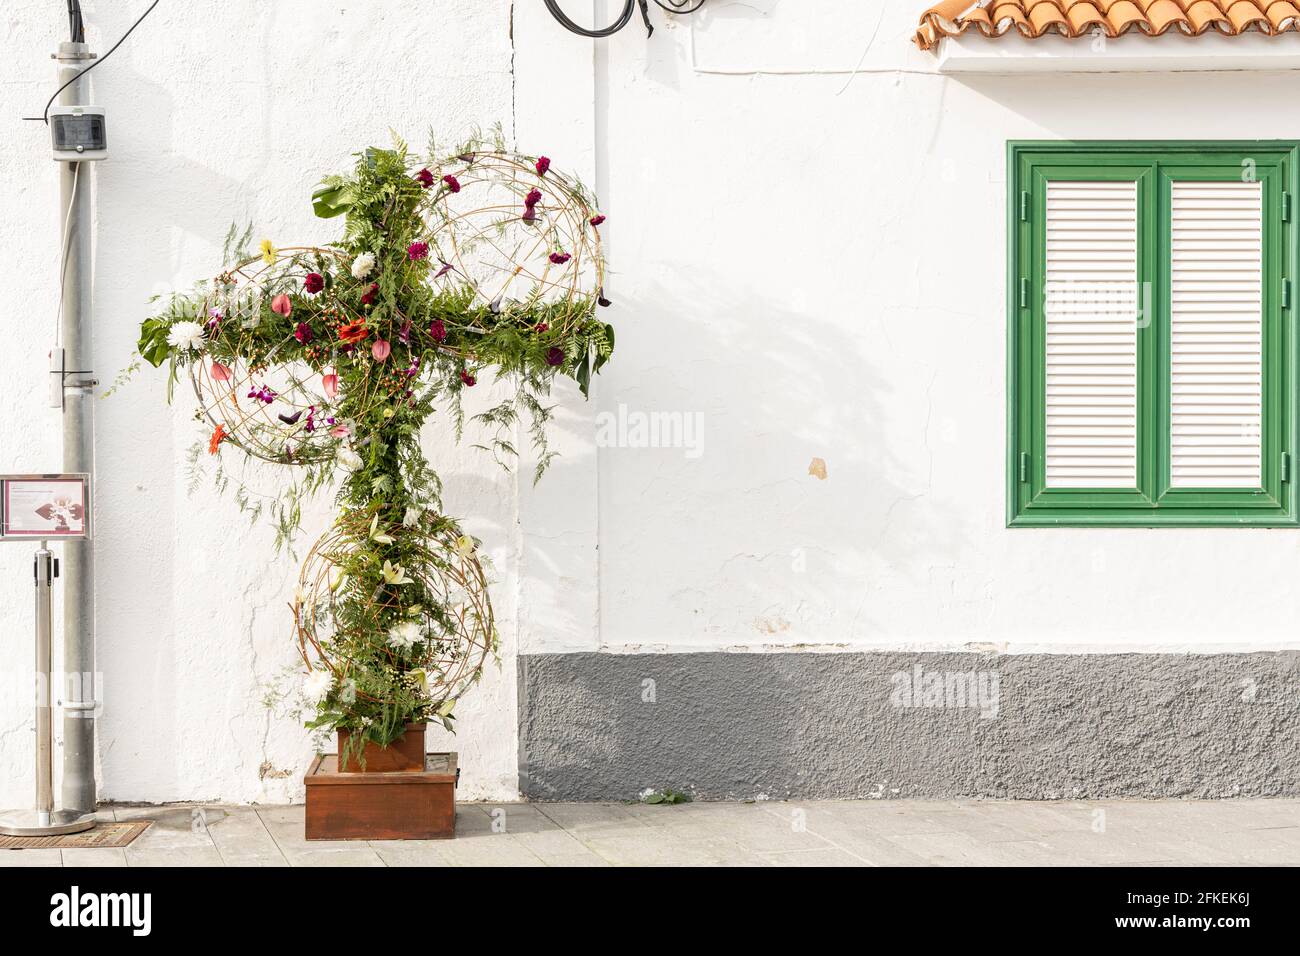 Tamaimo, Tenerife, Canary Islands. 1 May 2021. Crosses decorated with flowers for the annual Day of the Cross celebration in the Plaza del Iglesia in Tamaimo, Santiago del Teide. 'Esta Cruz simboliza el Ciclo de la Vida'. Victor Tabares González. Stock Photo